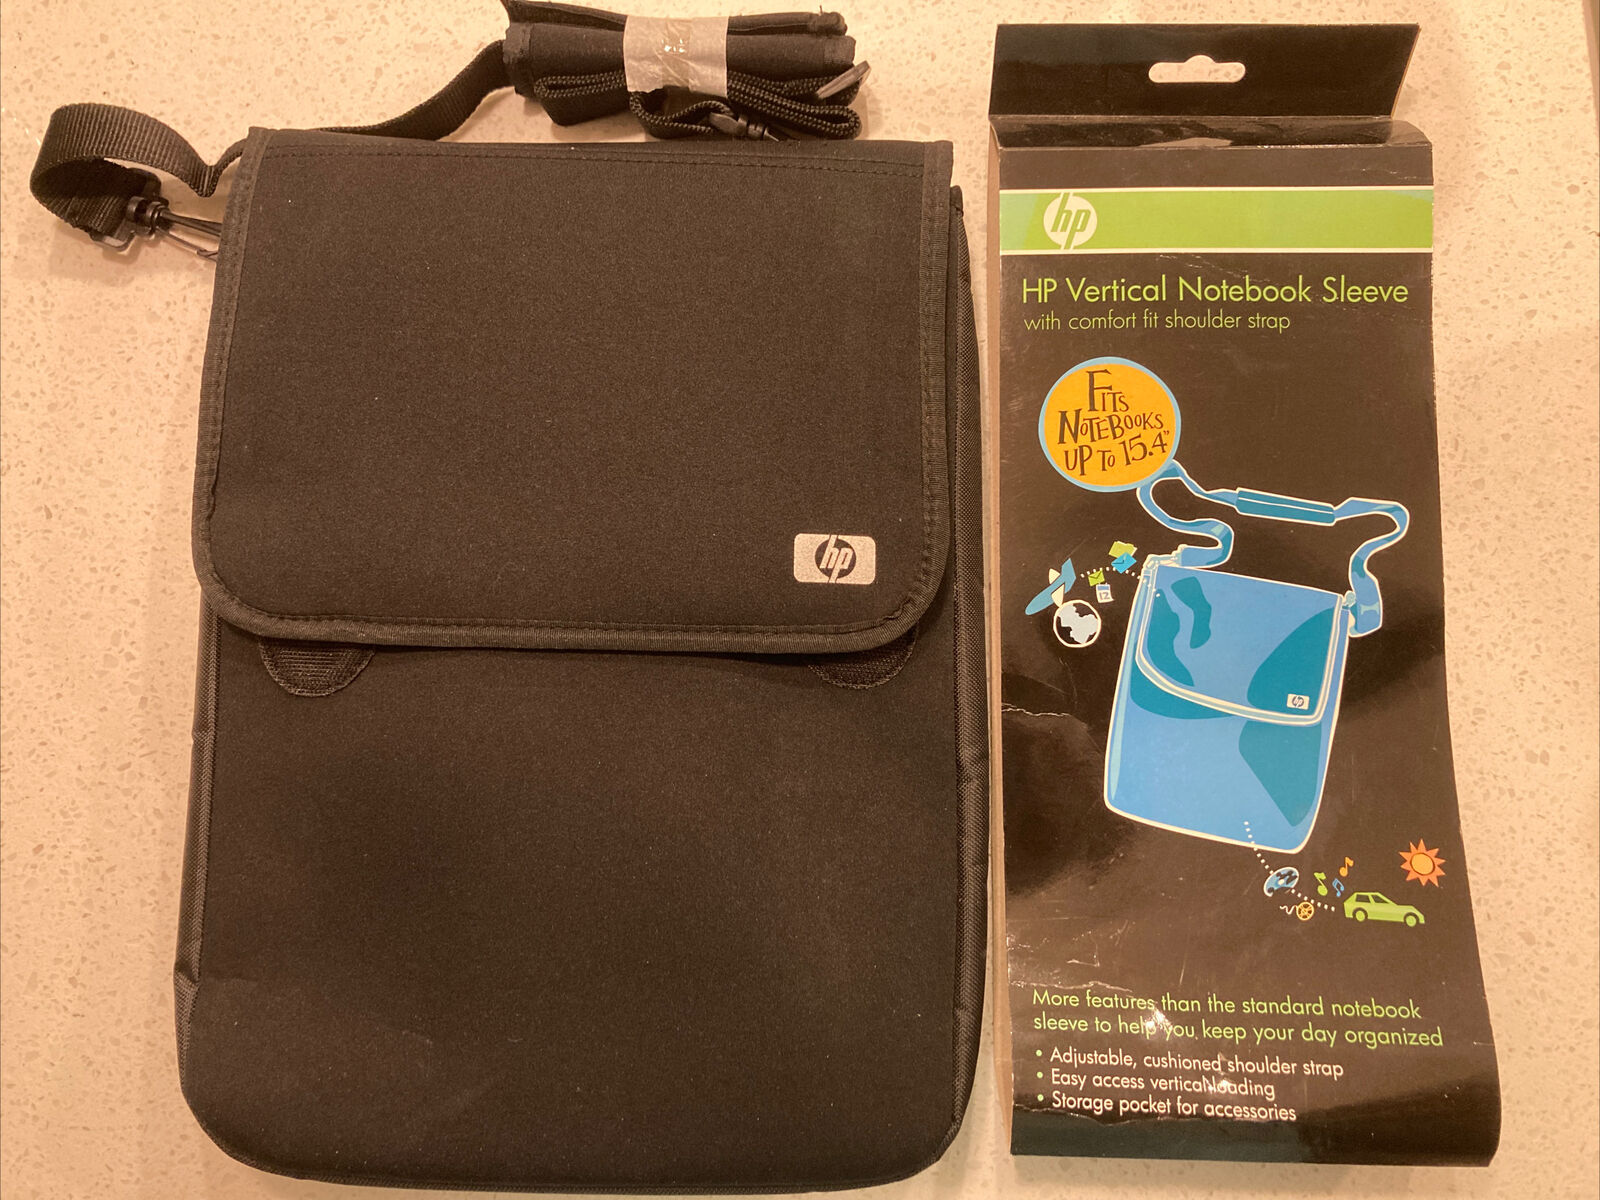 HP Vertical Notebook Sleeve w/ comfort fit shoulder strap - 10.75 x 14.5 x 1.75”